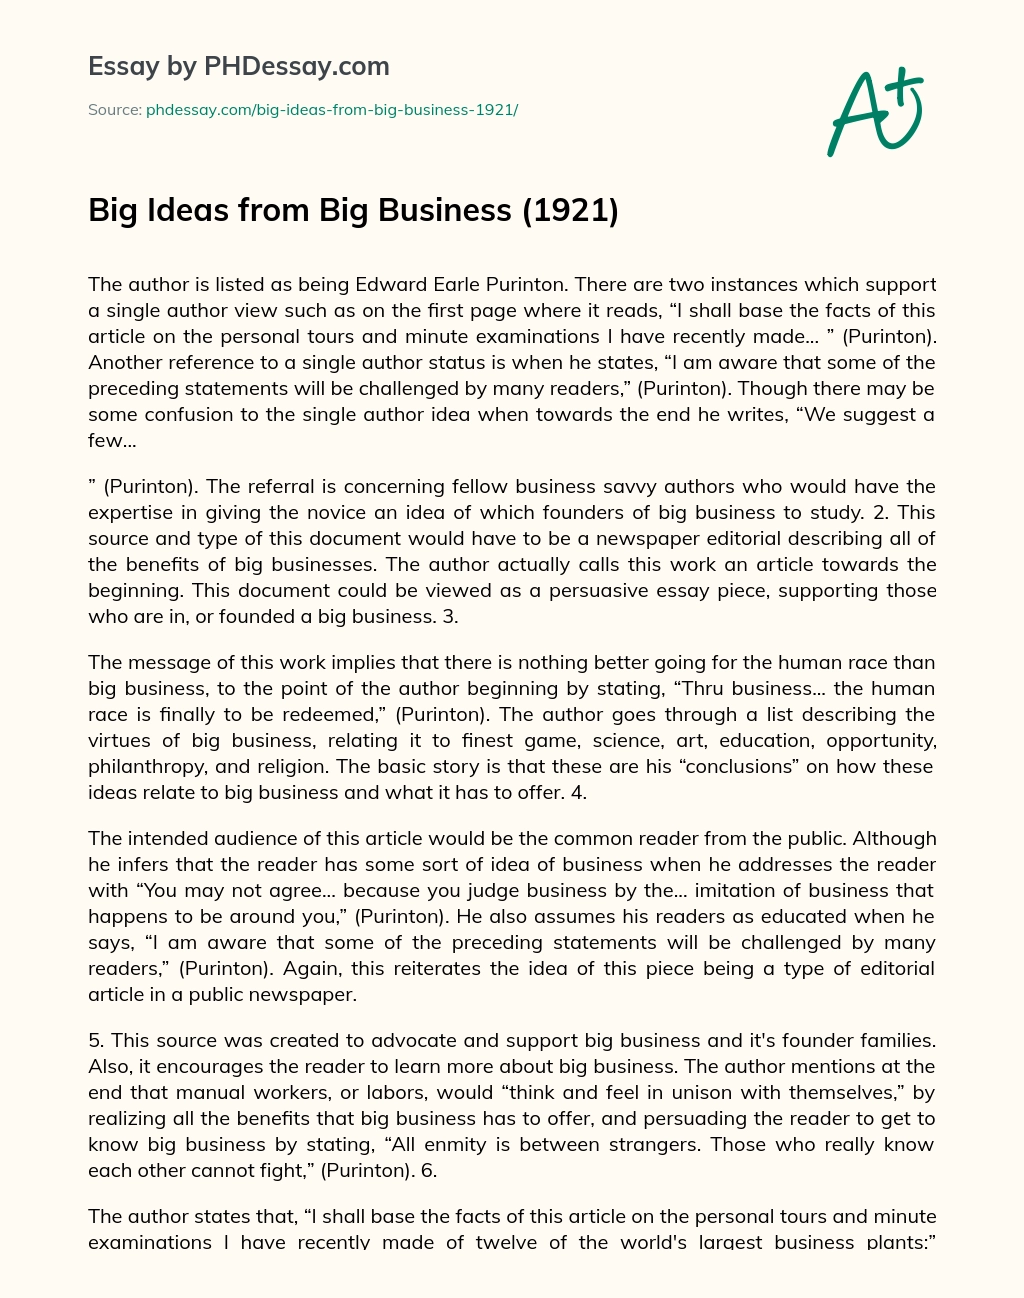 Big Ideas from Big Business (1921) essay